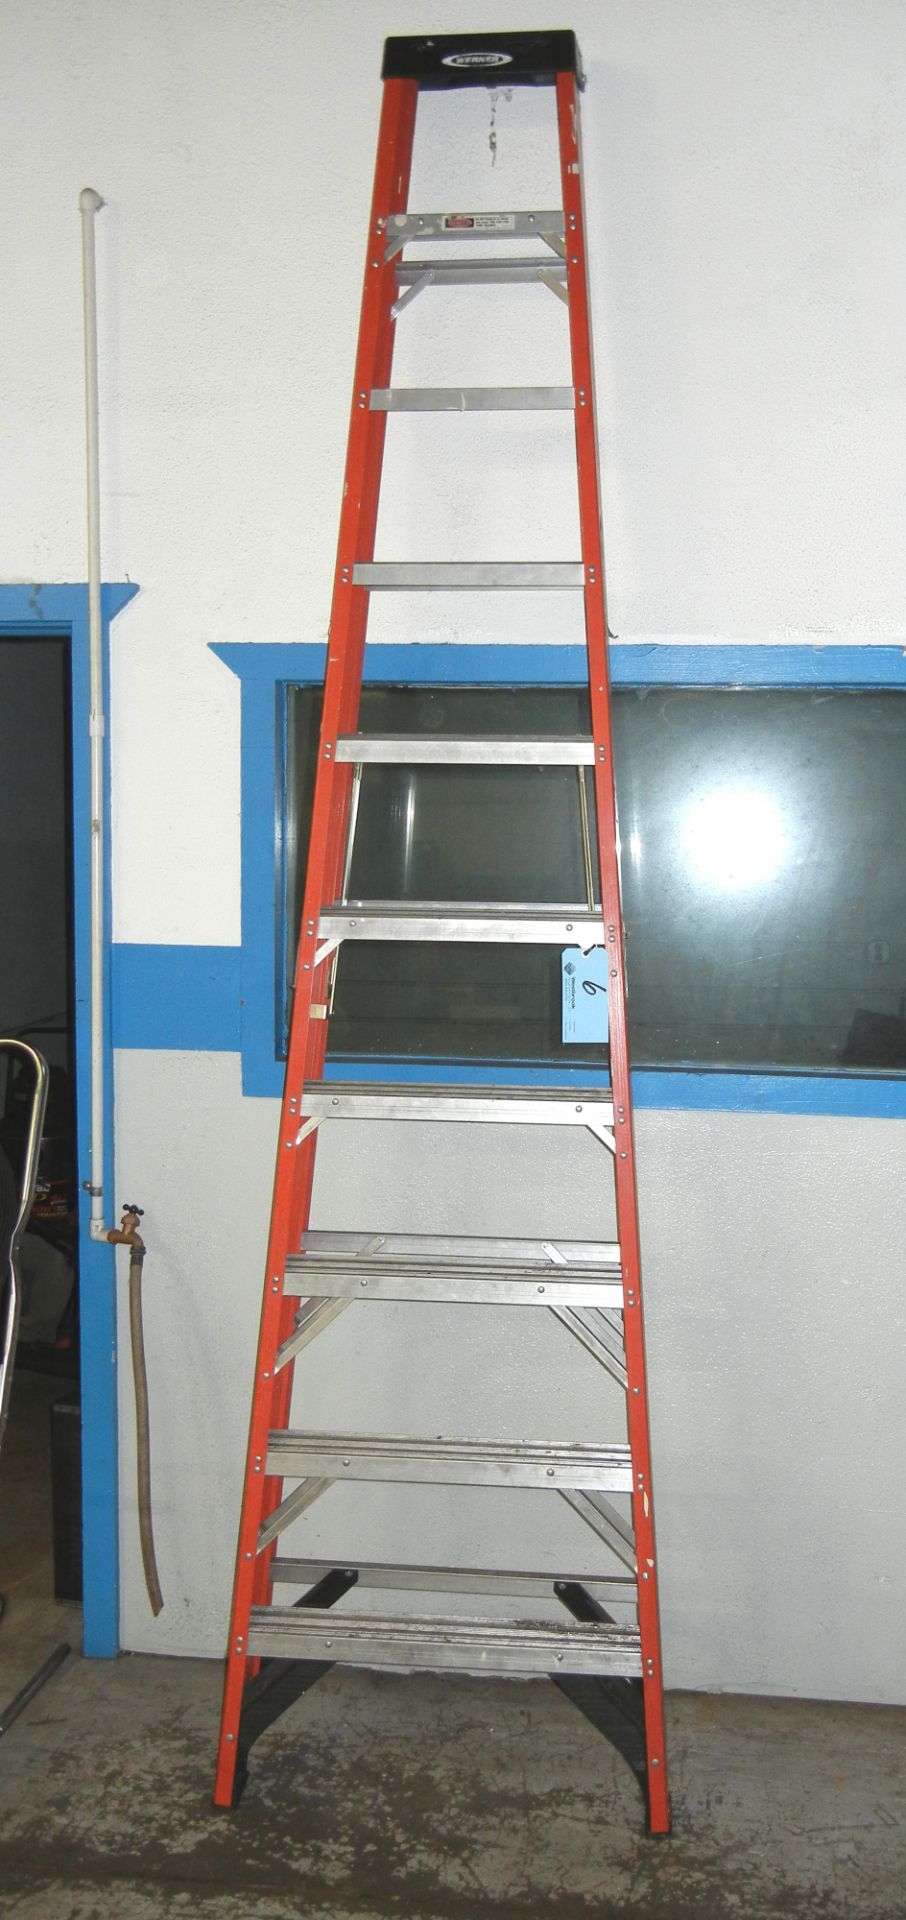 WERNER 10' Fiberglass Step Ladder